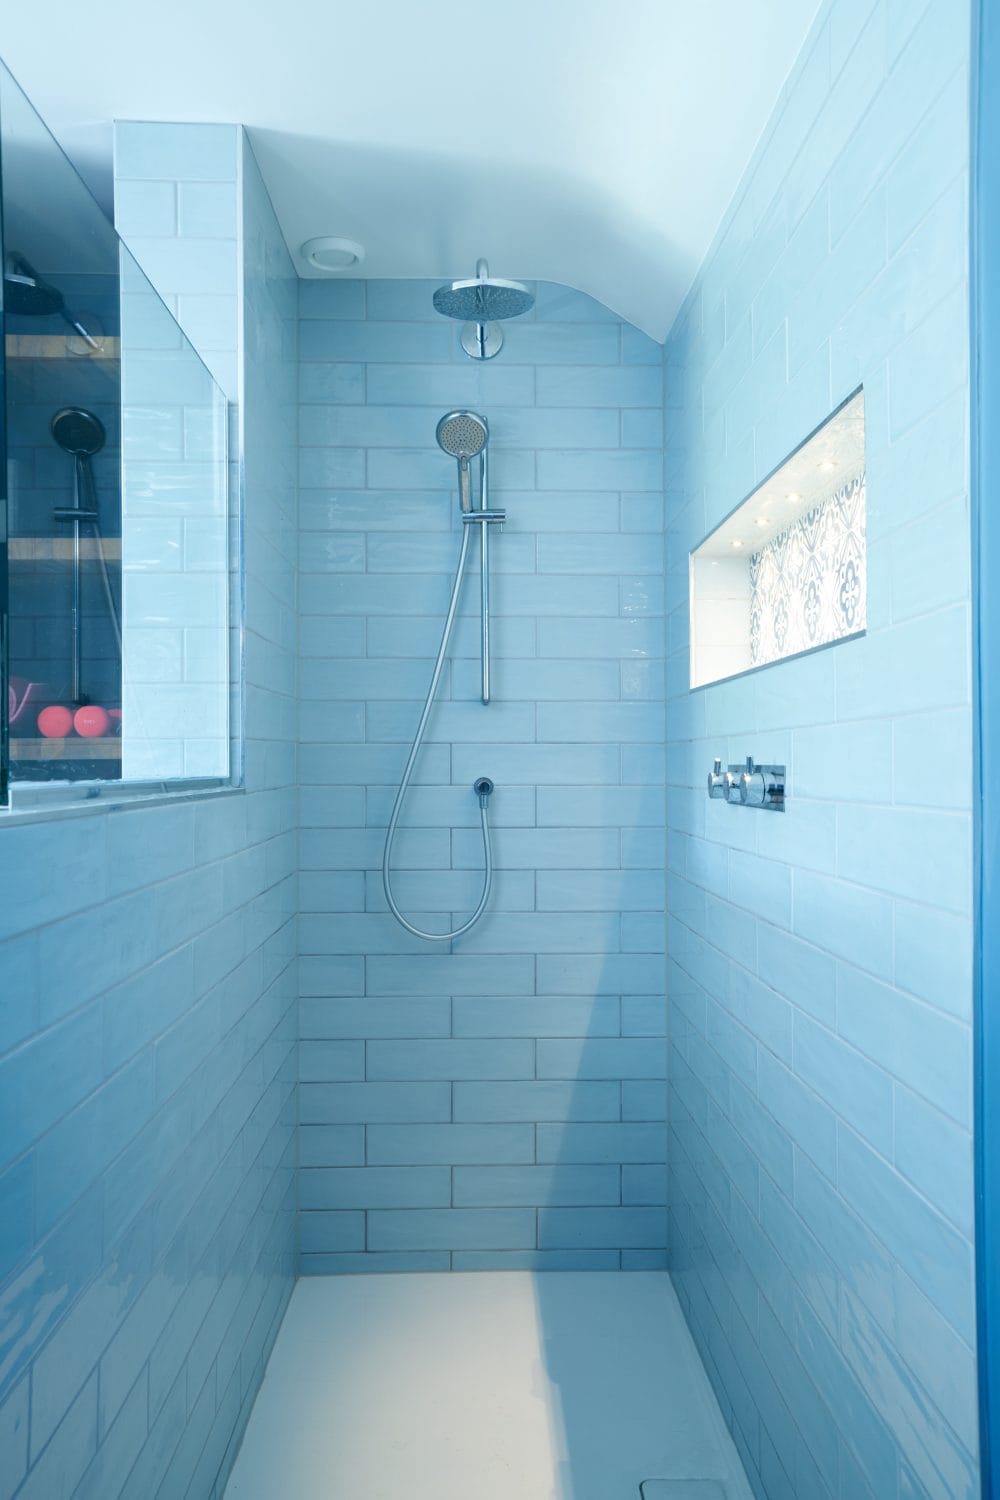 shower enclosure with blue tiles